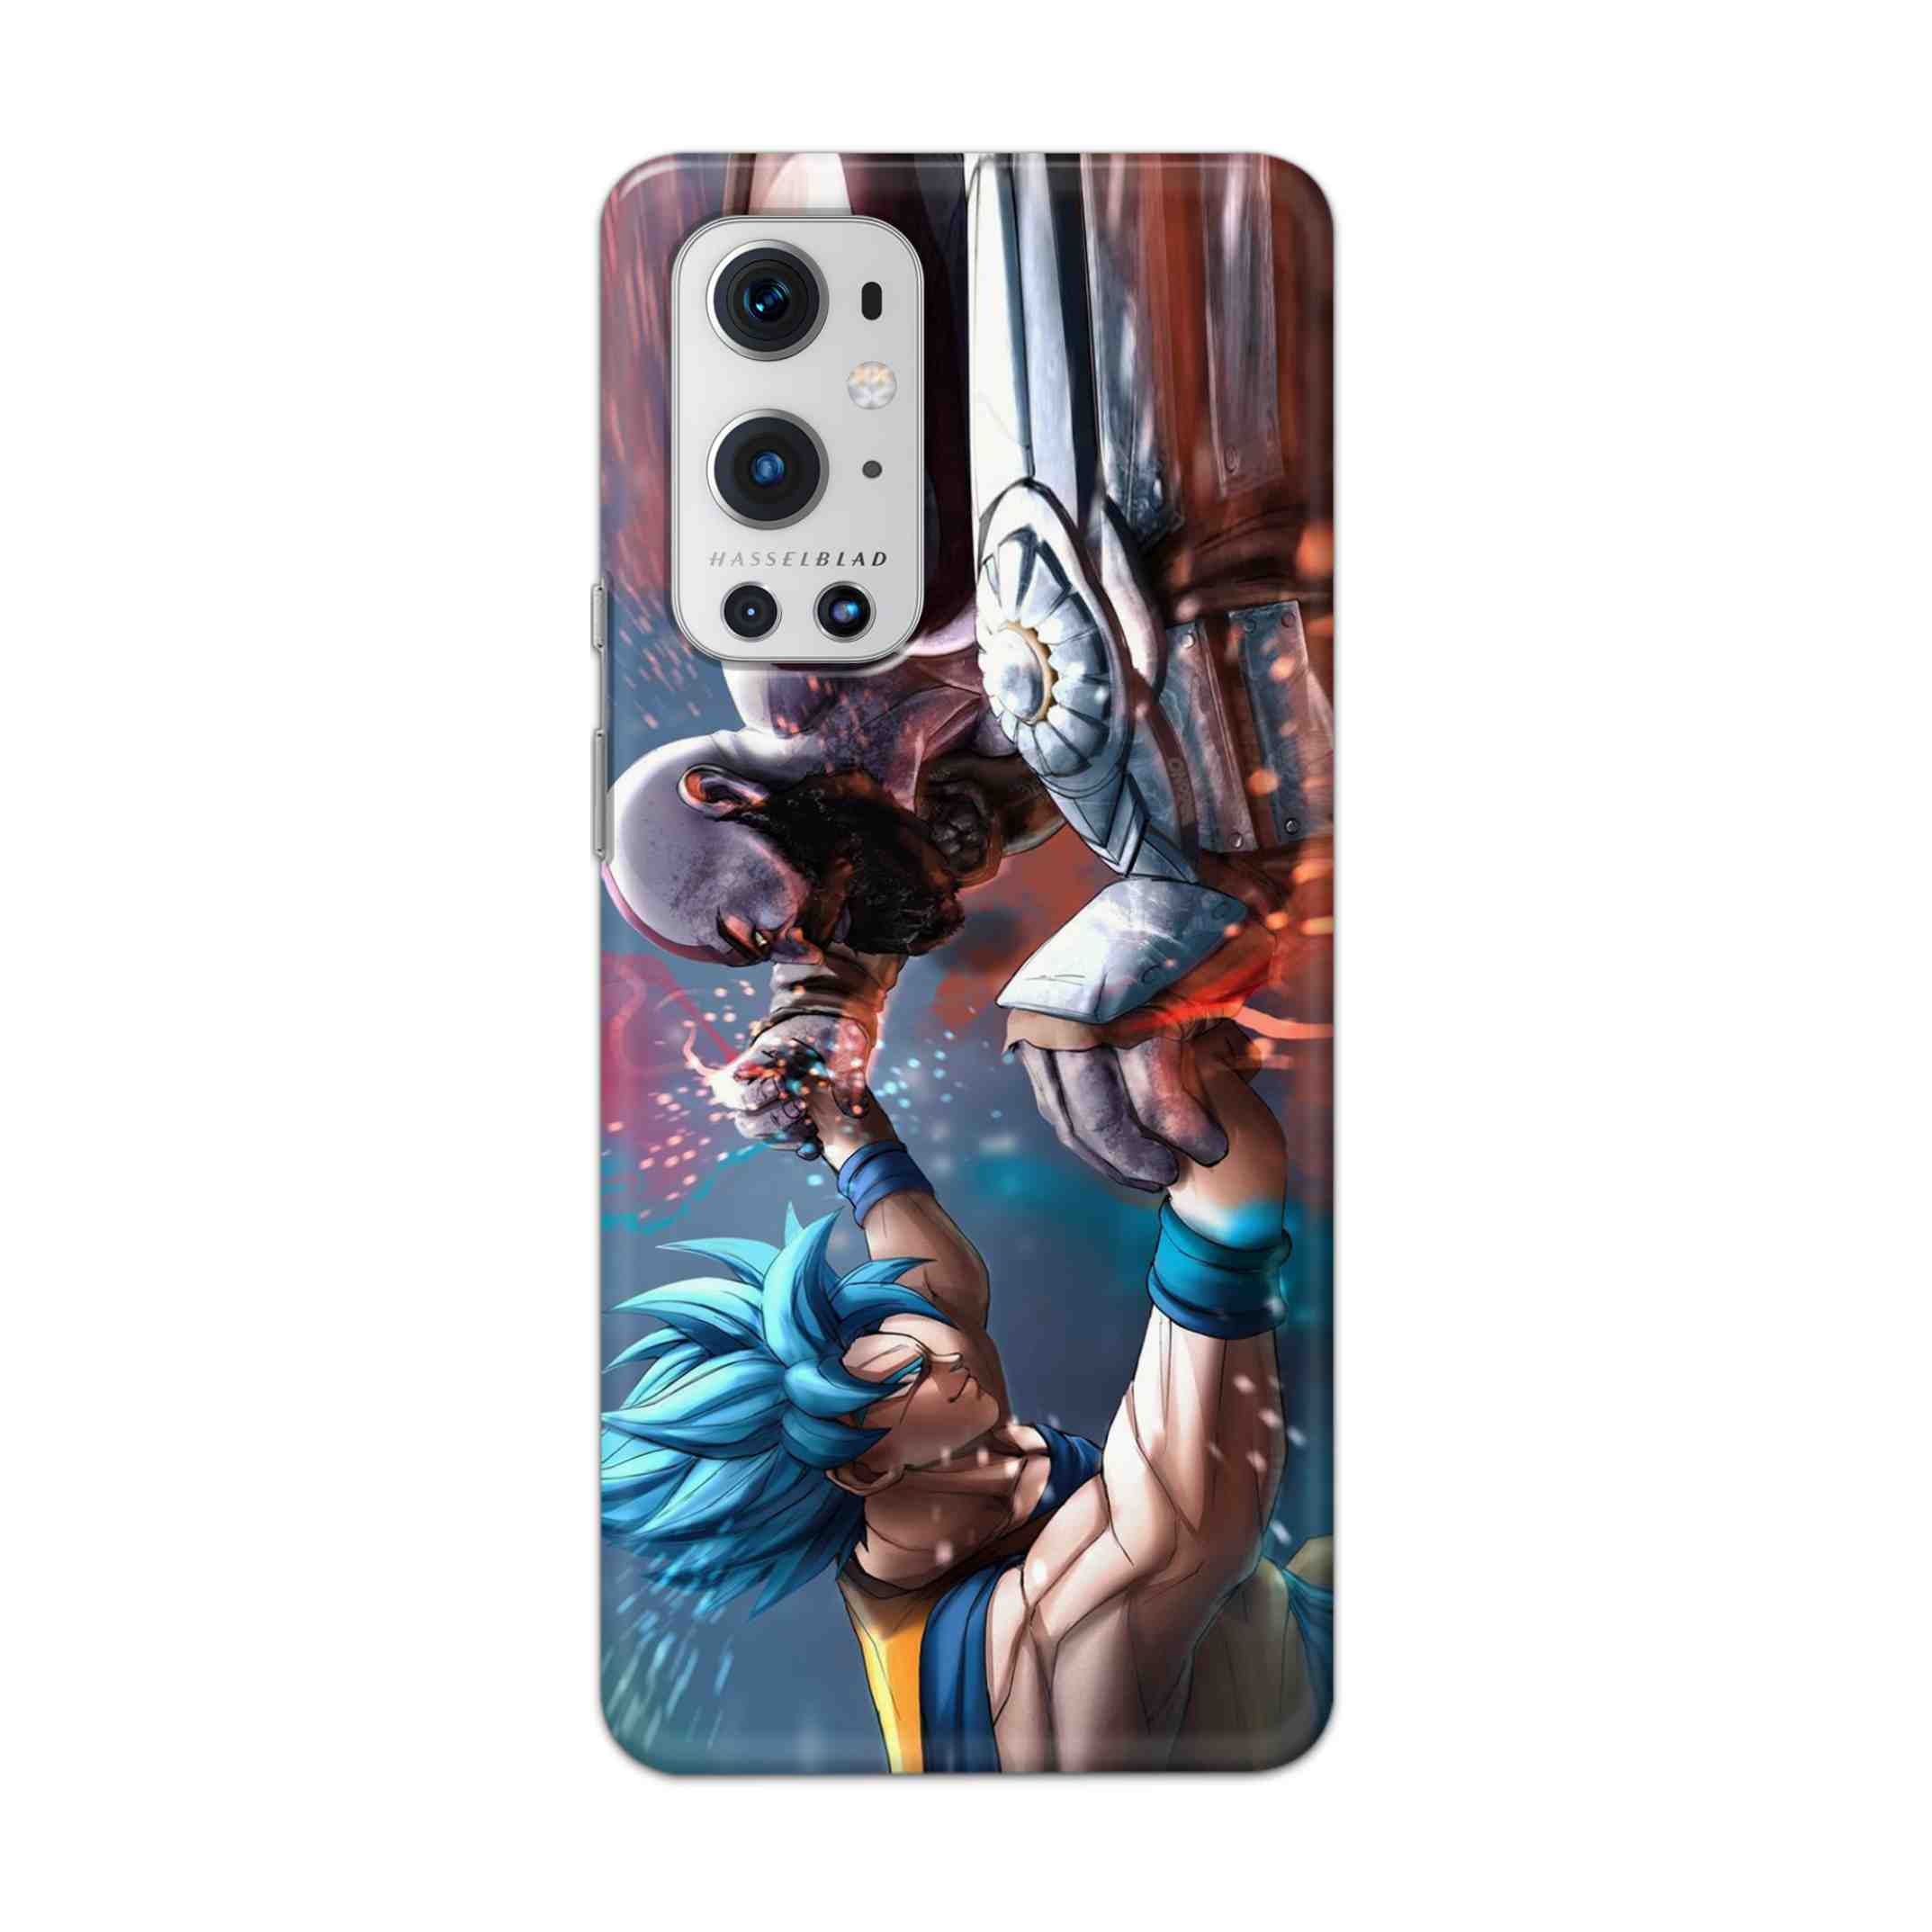 Buy Goku Vs Kratos Hard Back Mobile Phone Case Cover For OnePlus 9 Pro Online